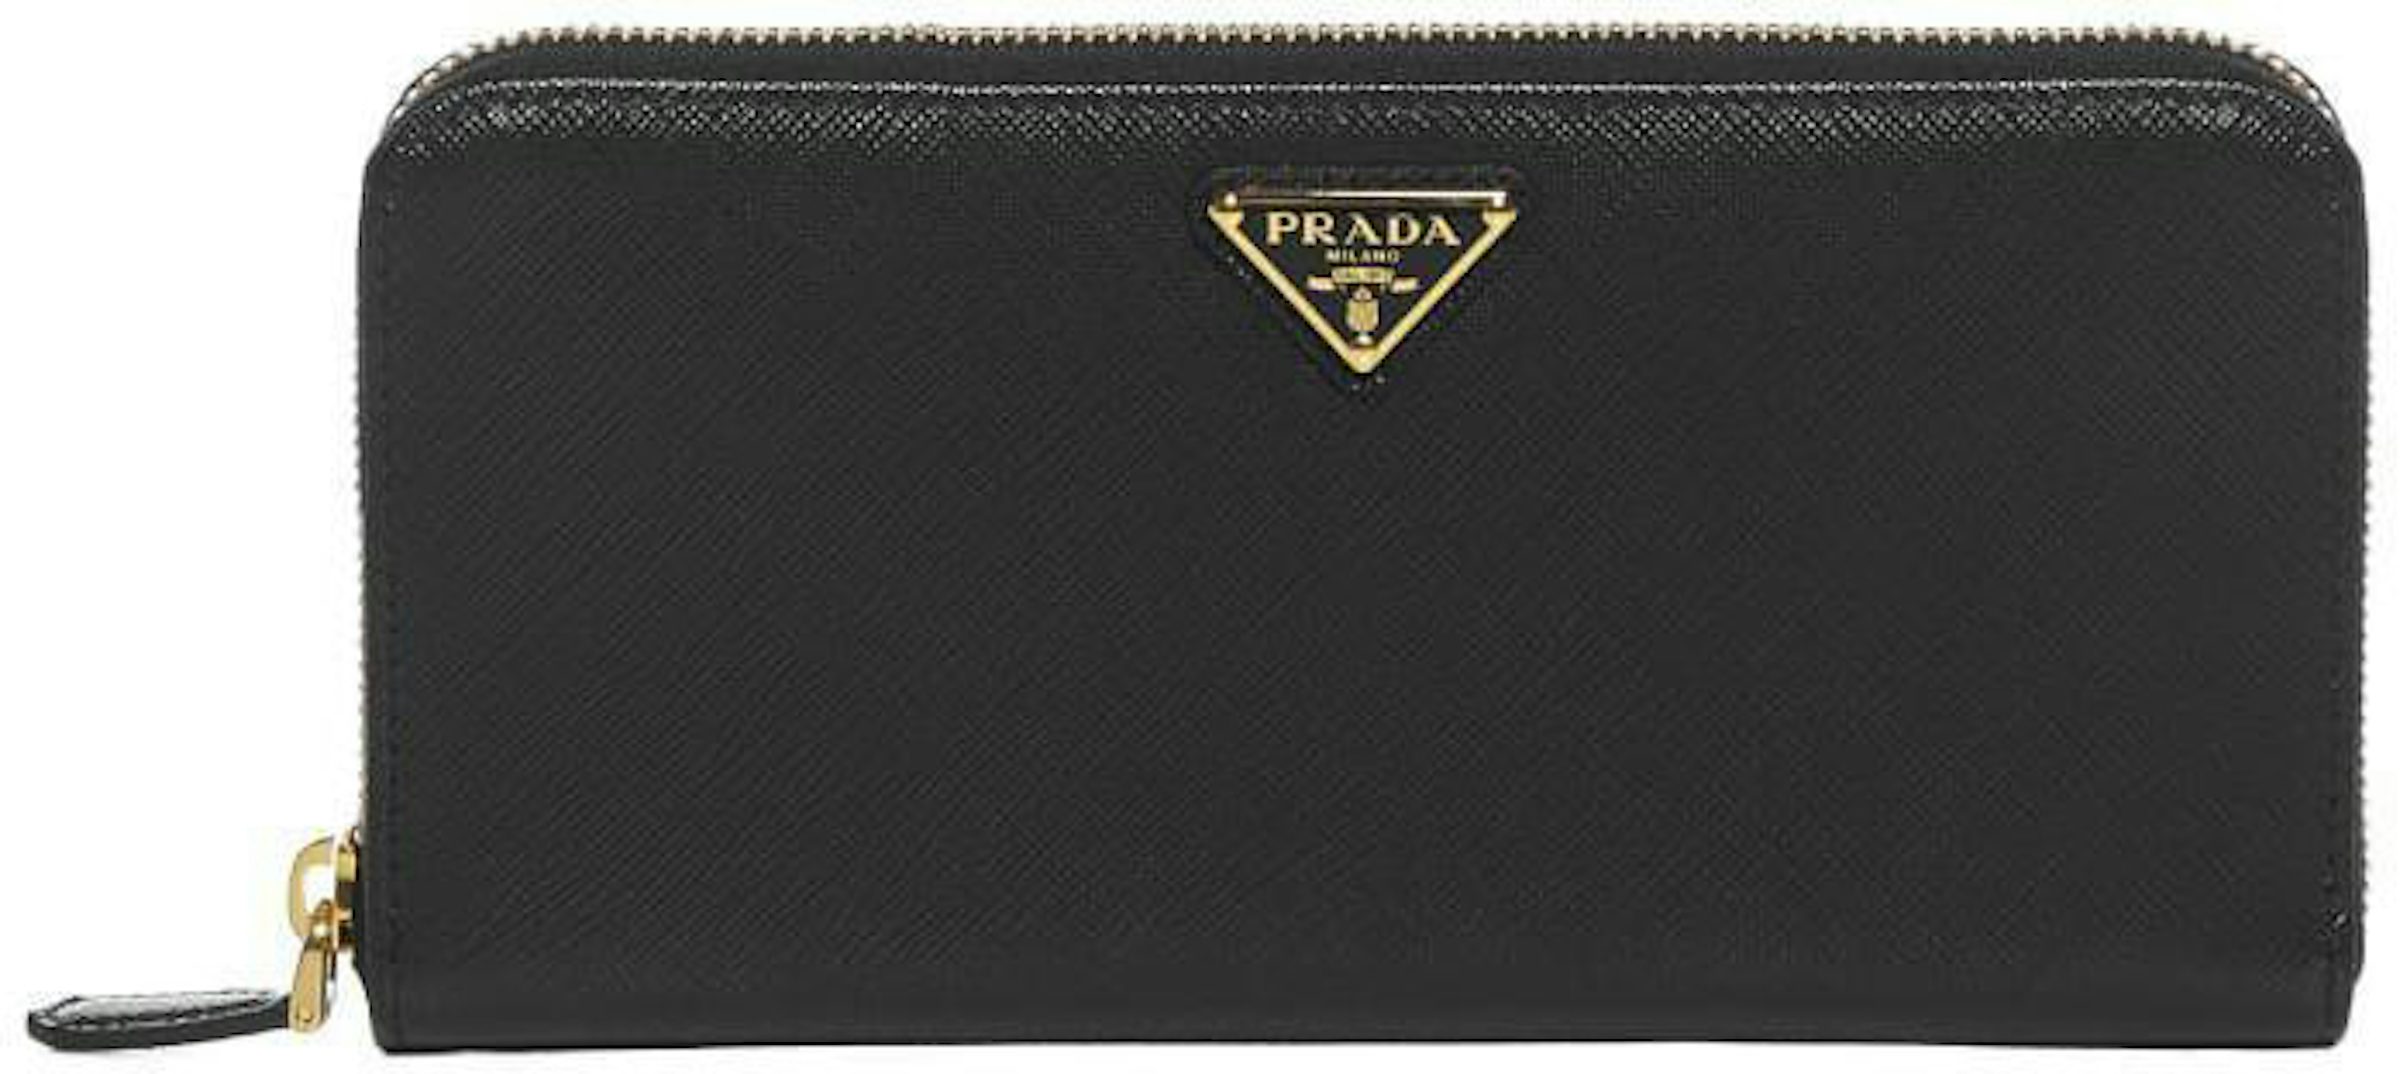 Buy Prada Wallet Accessories - StockX